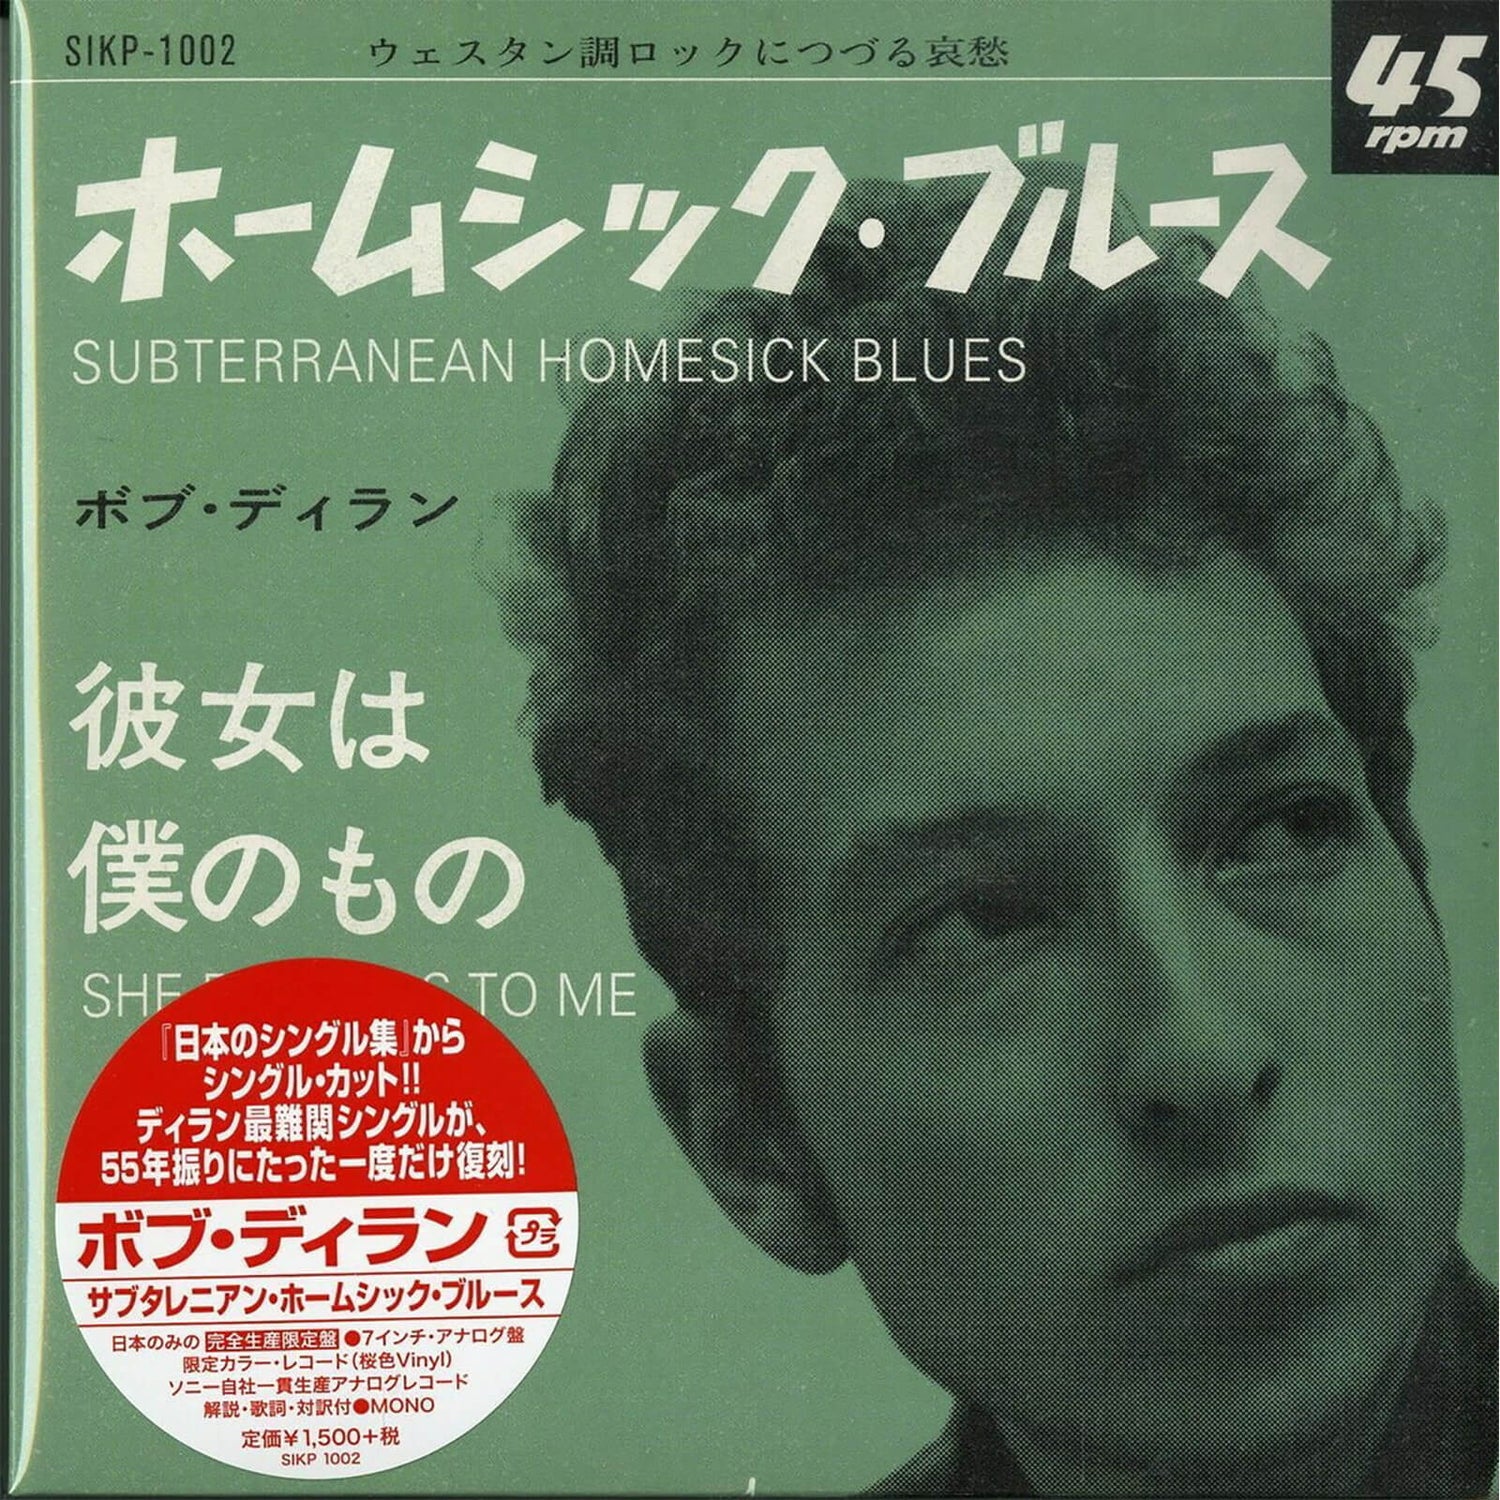 Bob Dylan - Subterranean Homesick Blues / She Belongs To Me 18 cm Édition japonaise